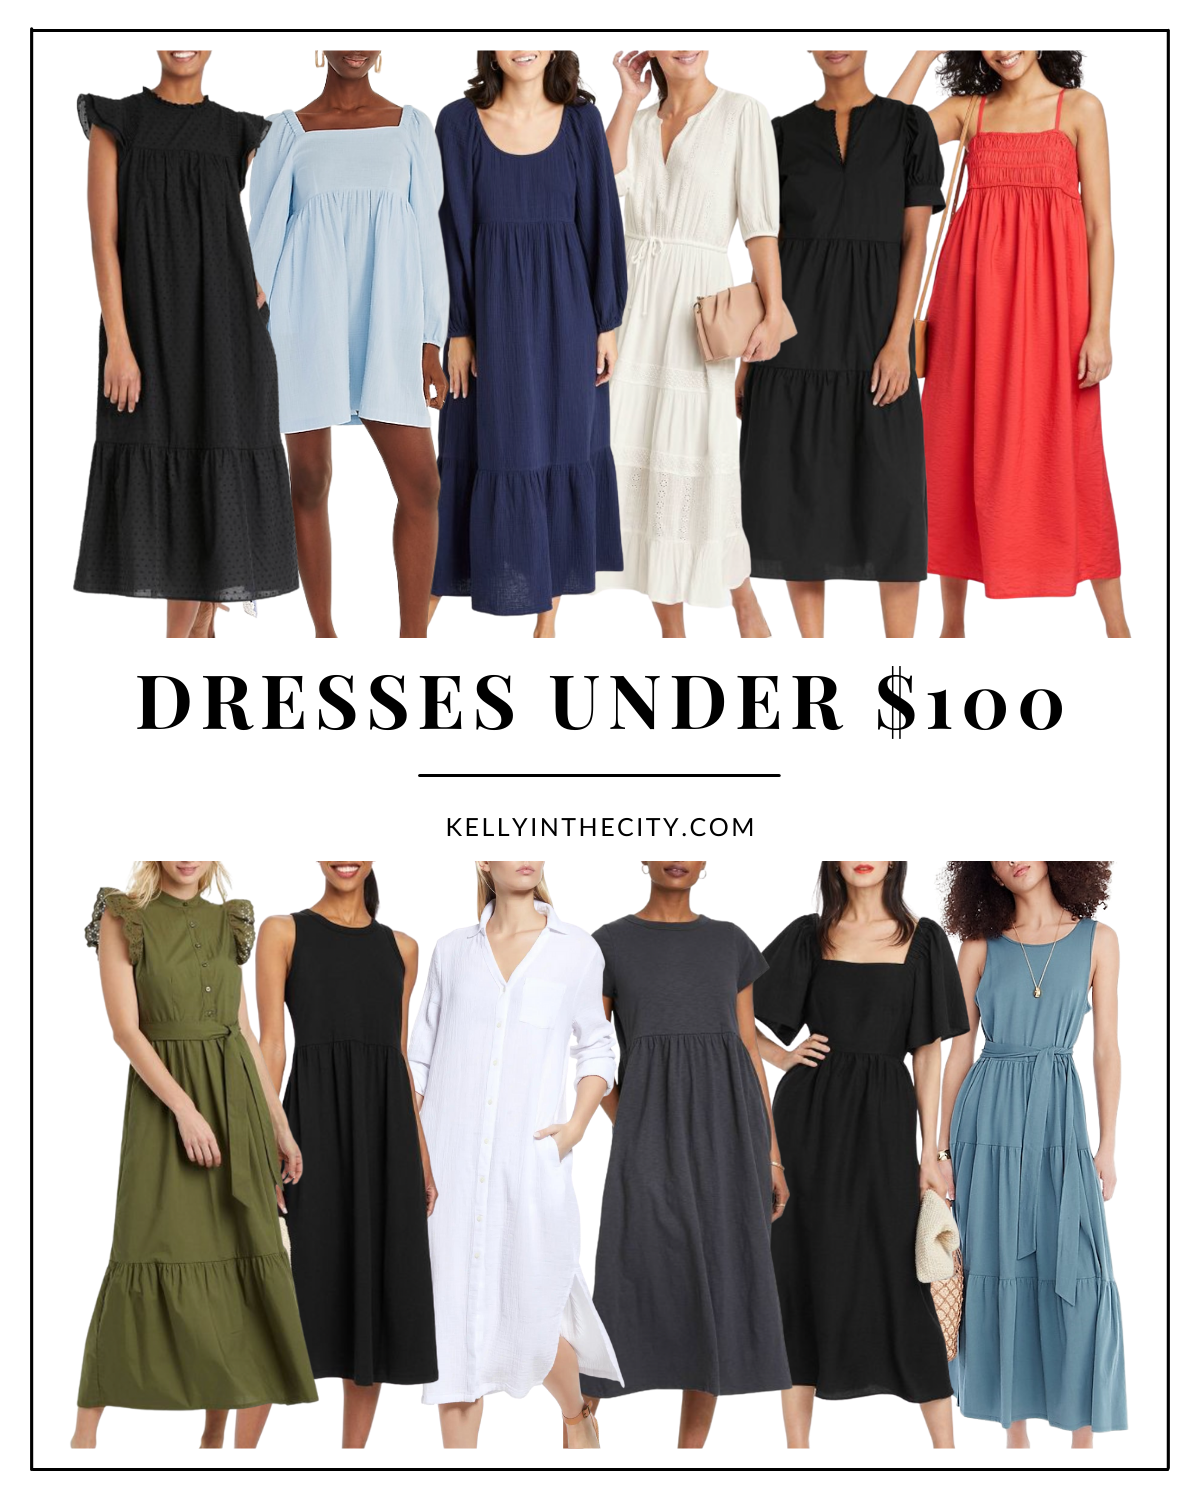 Dresses Under $100